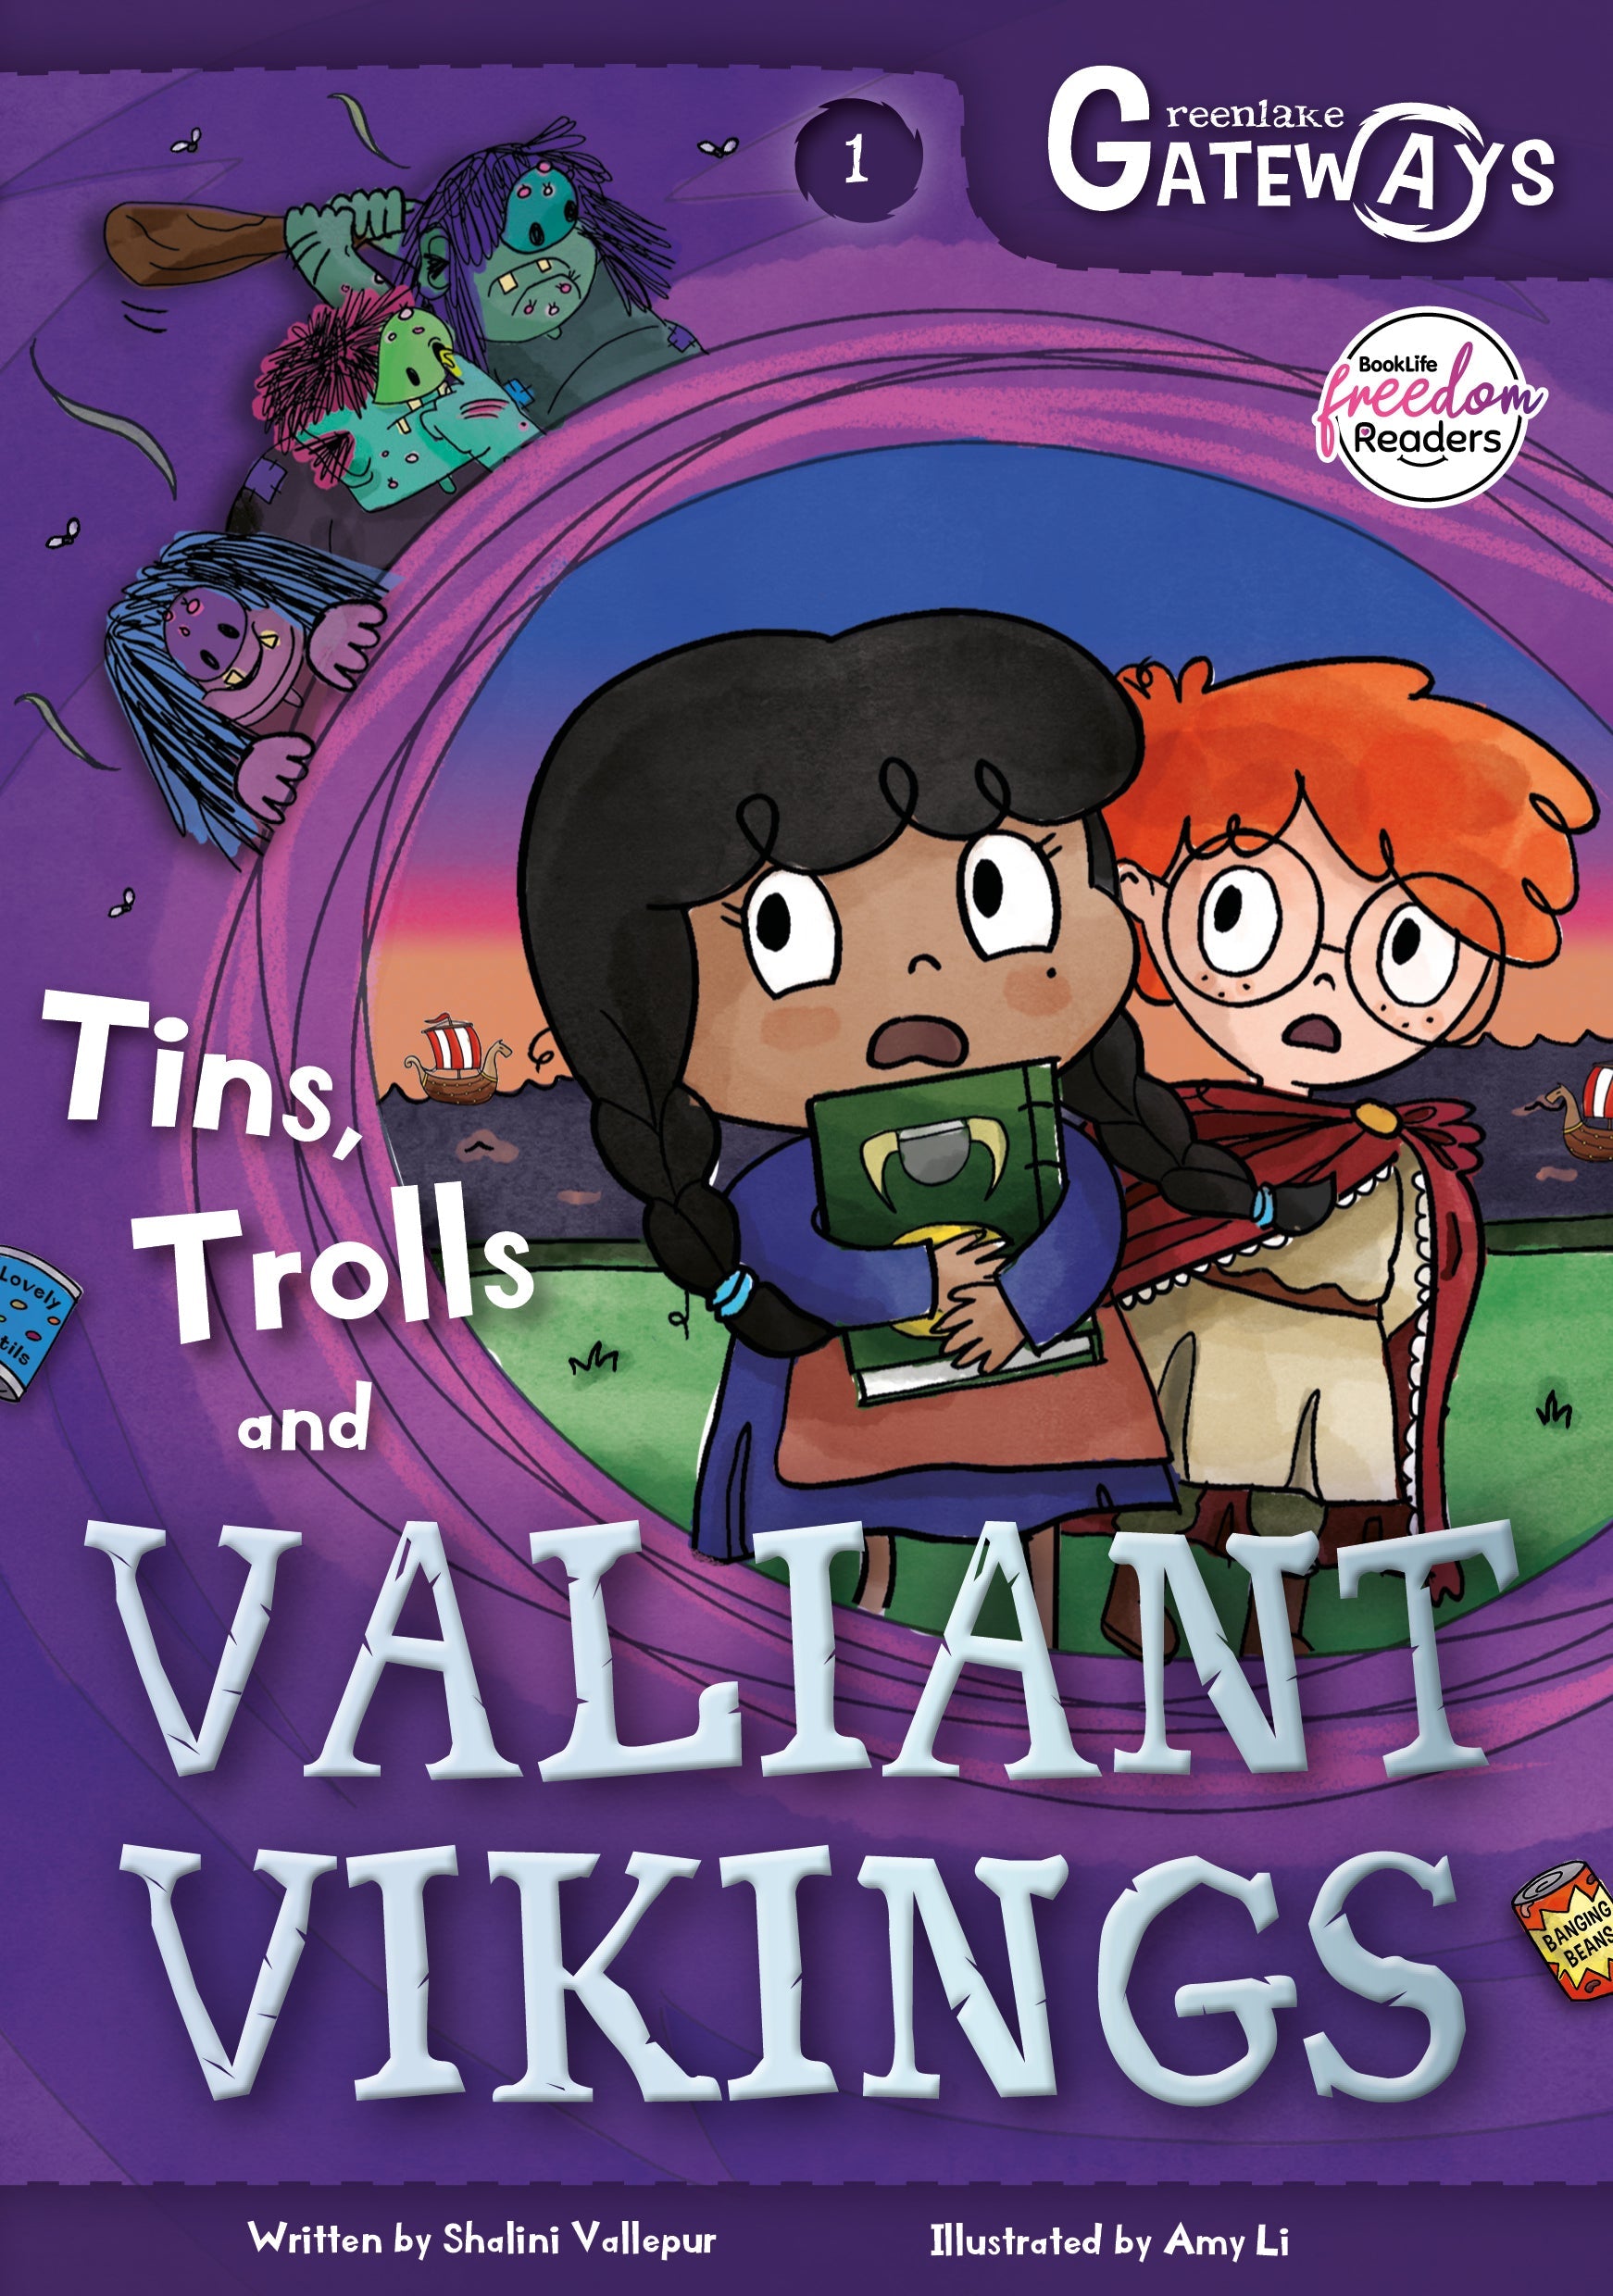 Tins, Trolls and Valiant Vikings (Greenlake Gateways book 1)